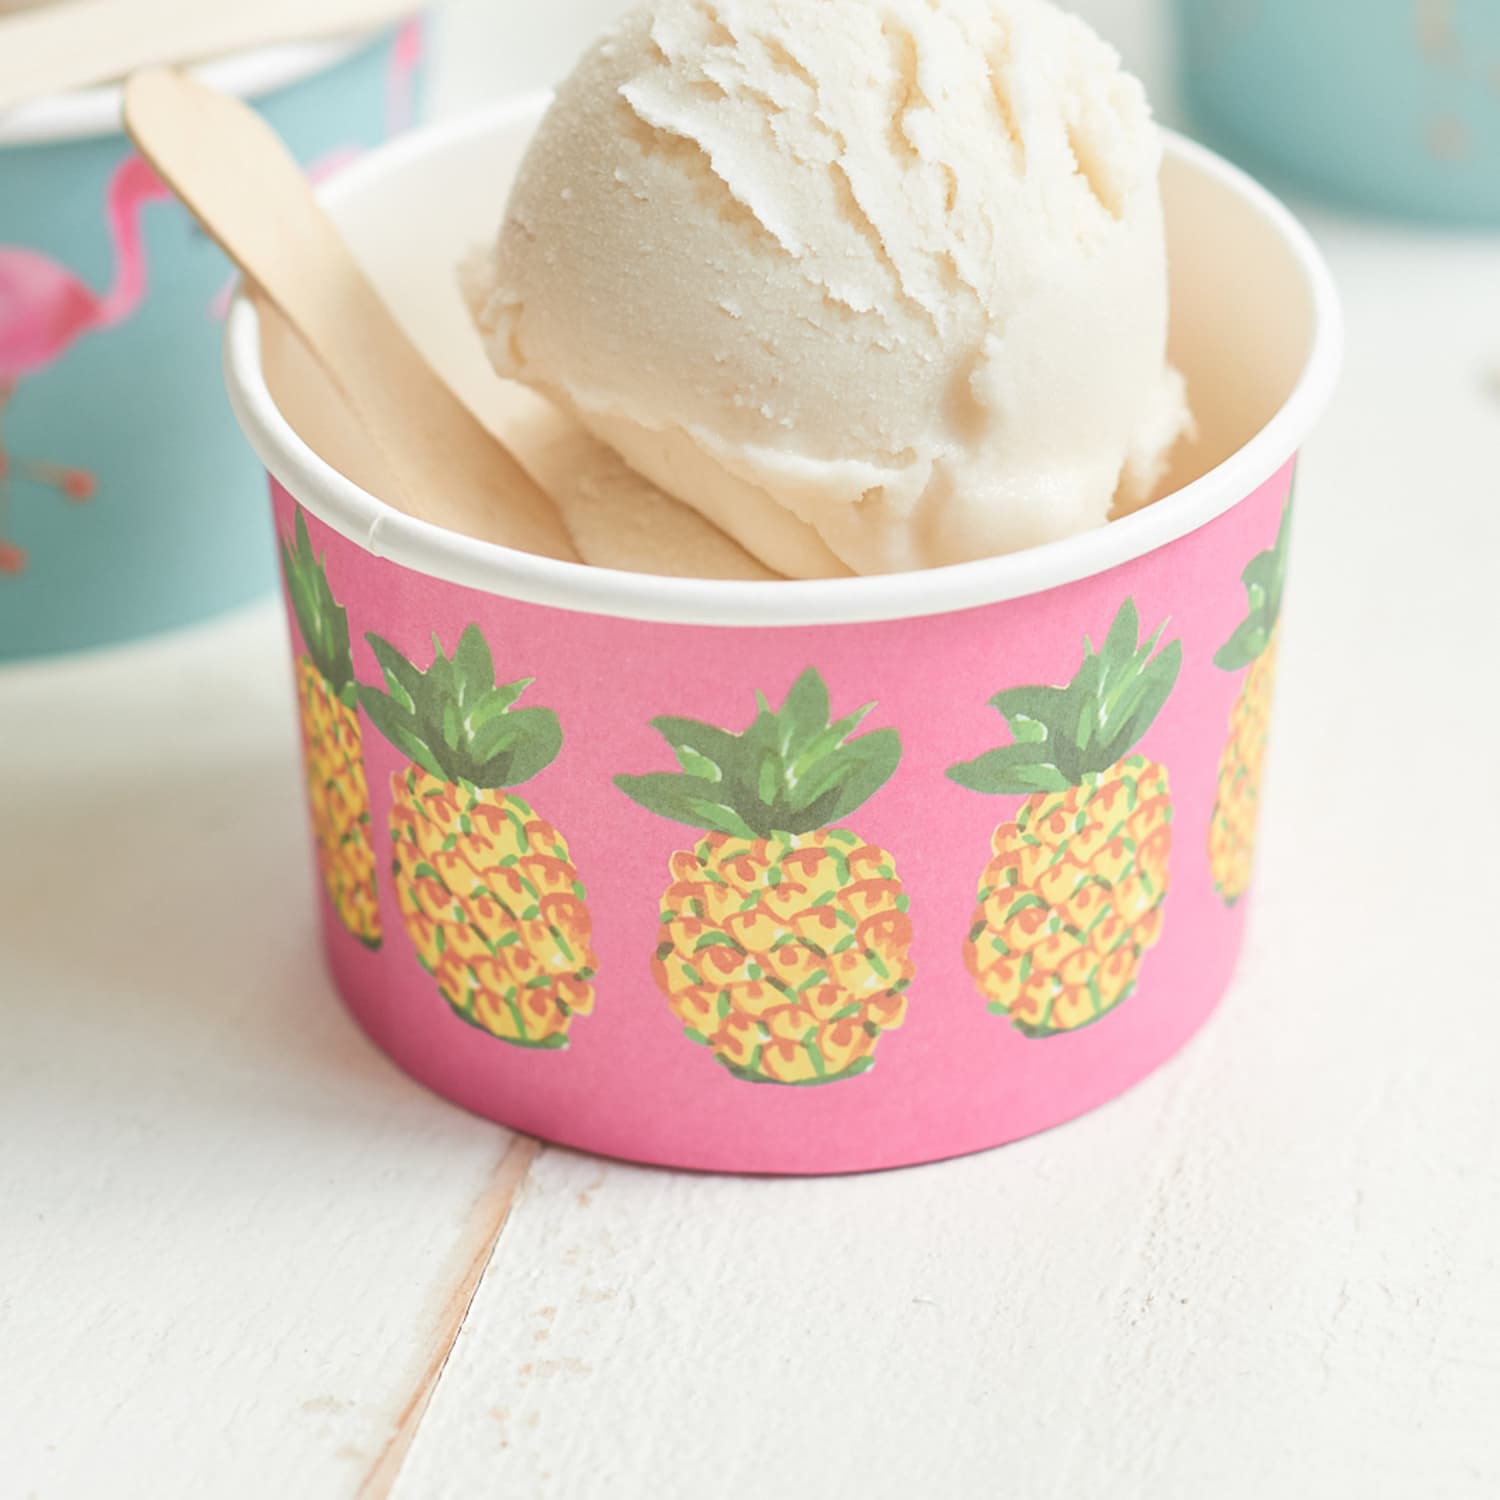 Best Dairy-Free Vegan Ice Cream Recipe (5 Ingredients, Creamy